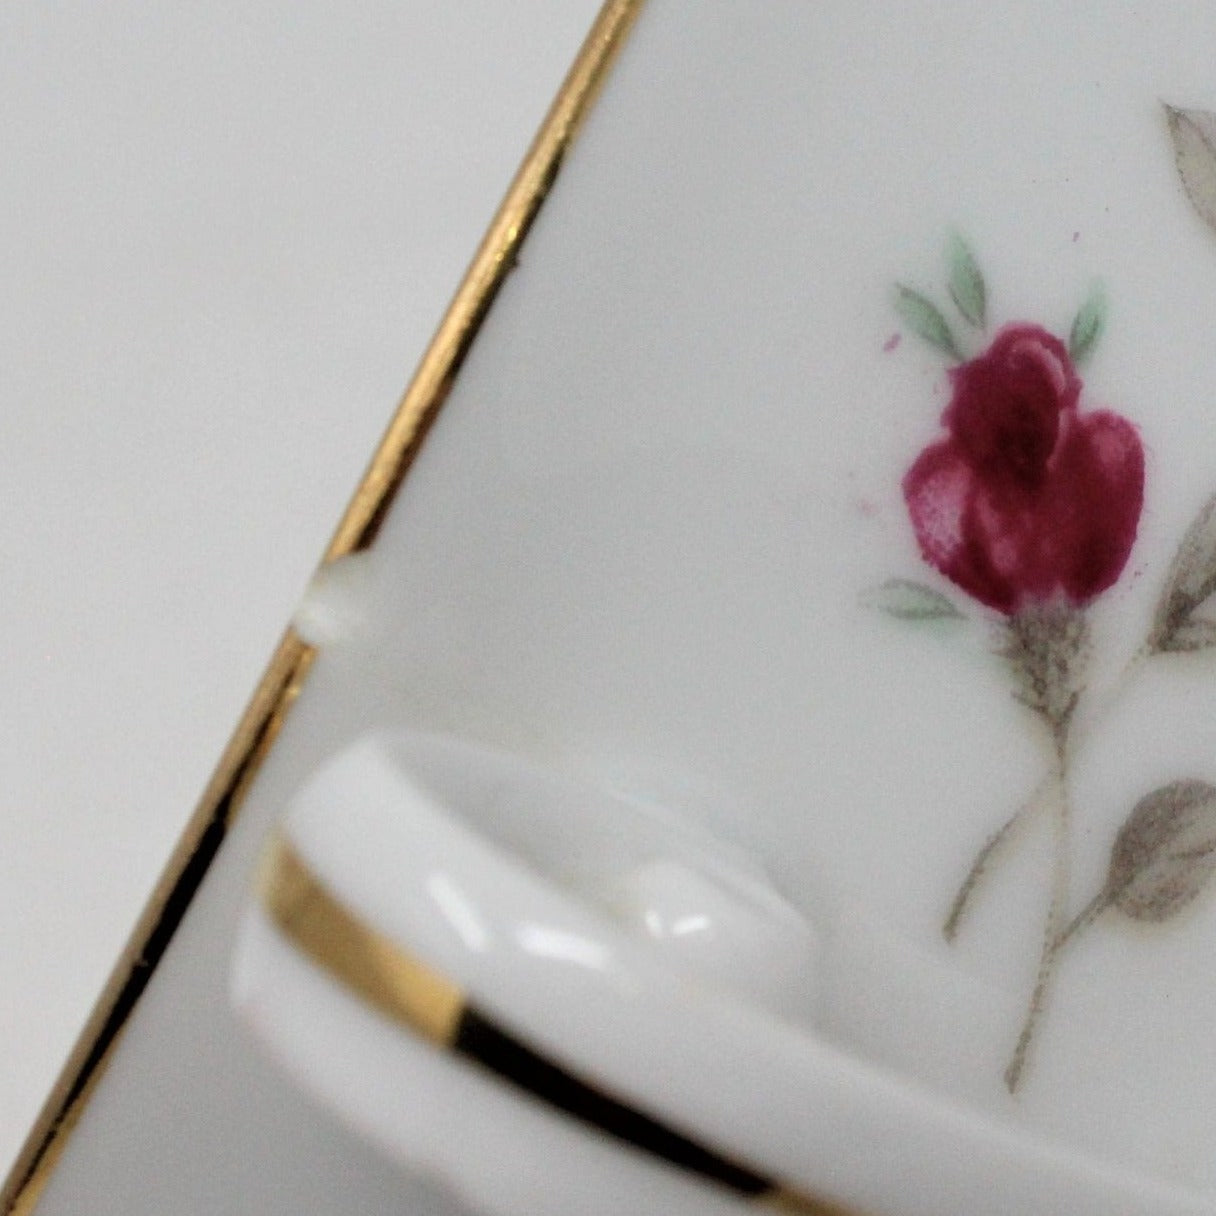 Teacup and Saucer, Diamond China, Moss Rose, Vintage Japan